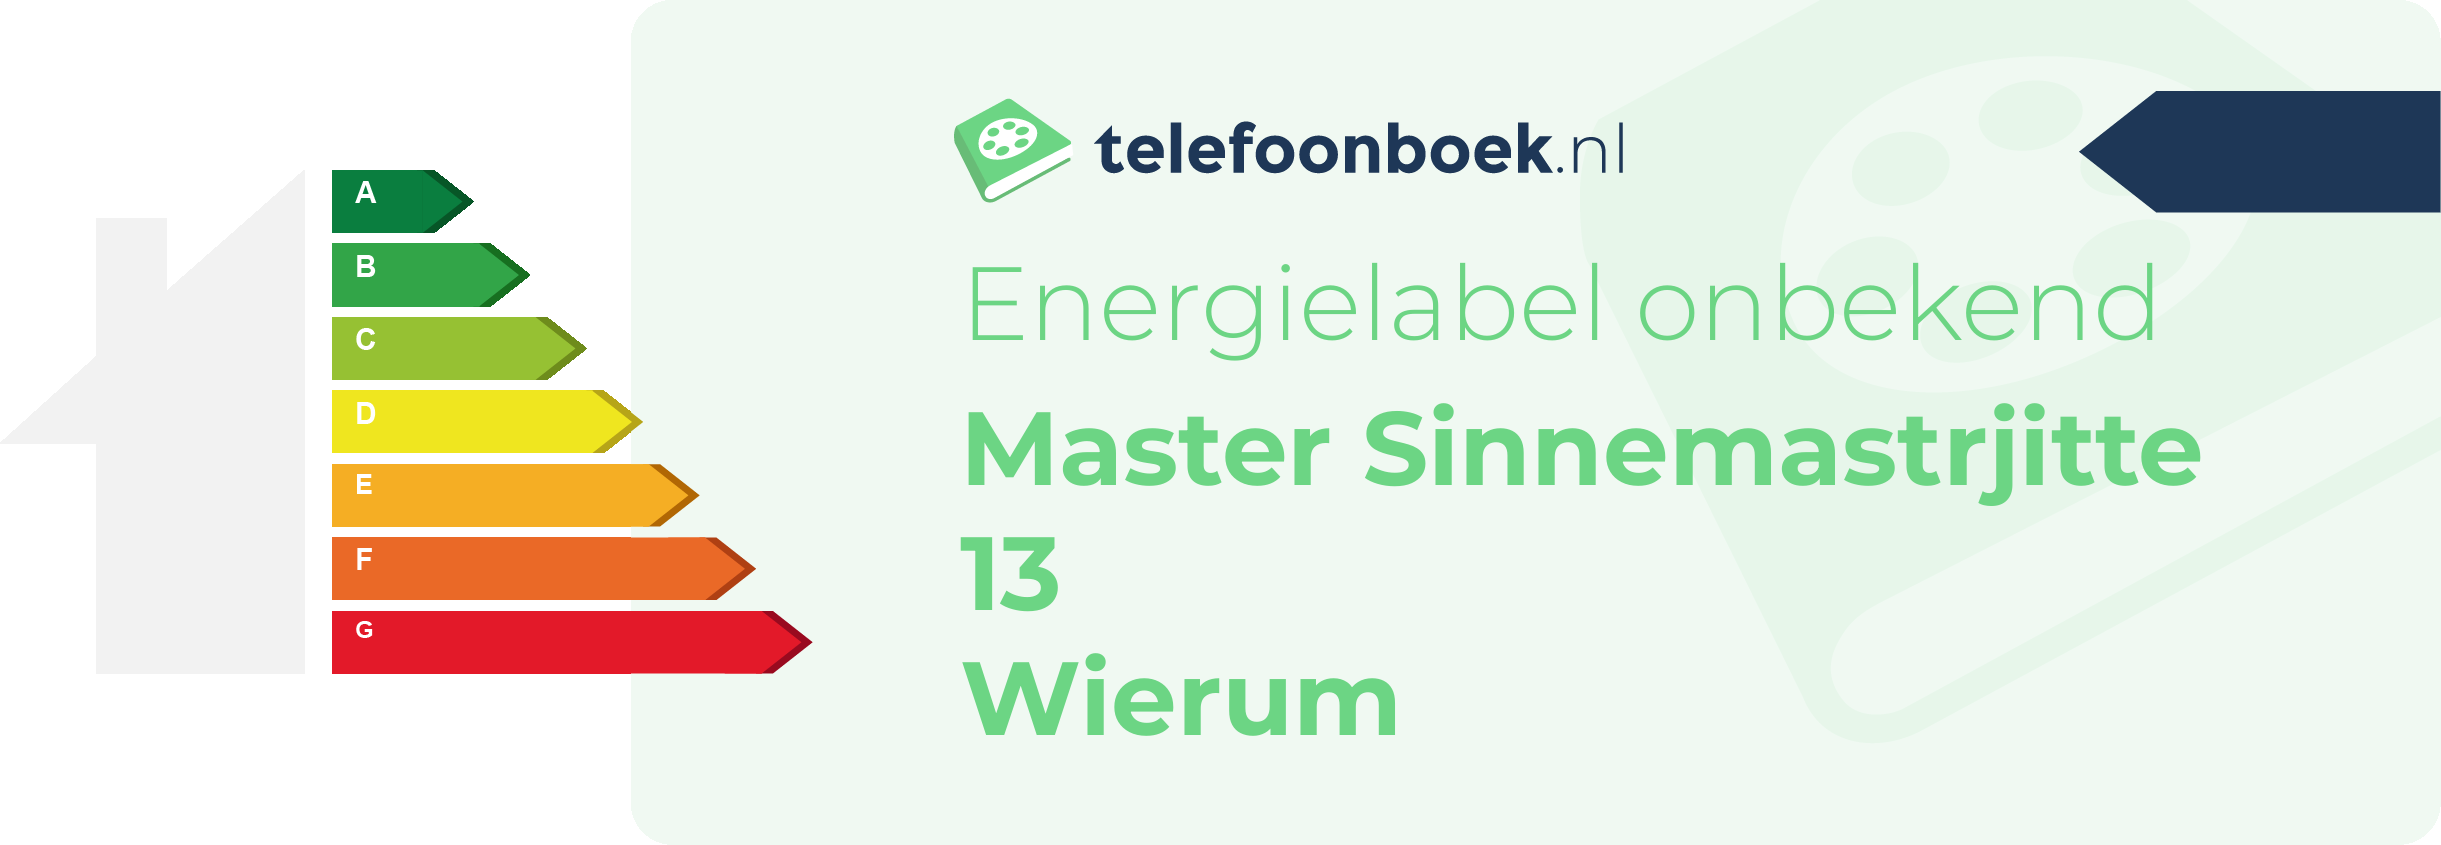 Energielabel Master Sinnemastrjitte 13 Wierum